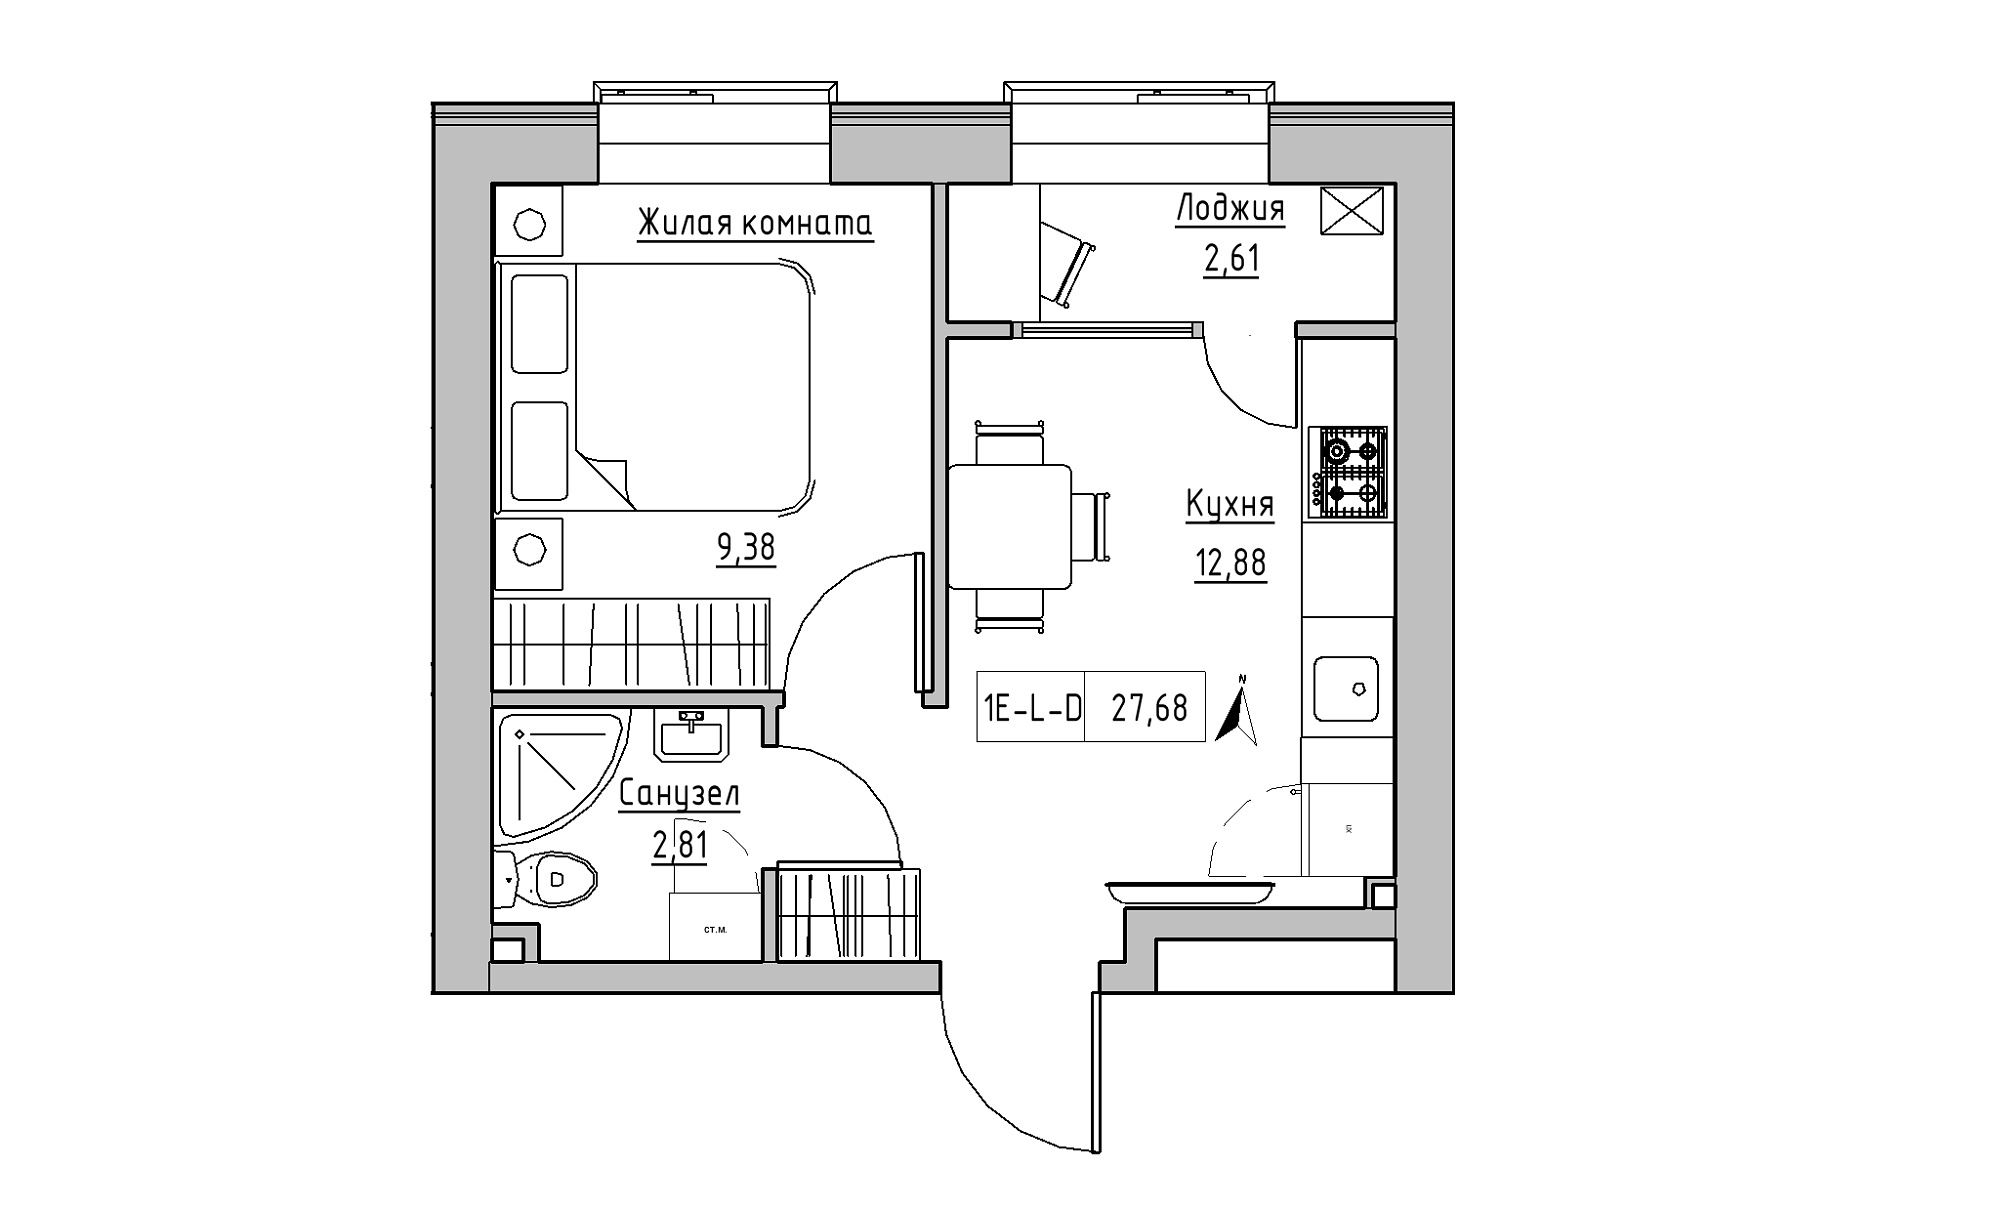 Planning 1-rm flats area 27.68m2, KS-016-02/0001.